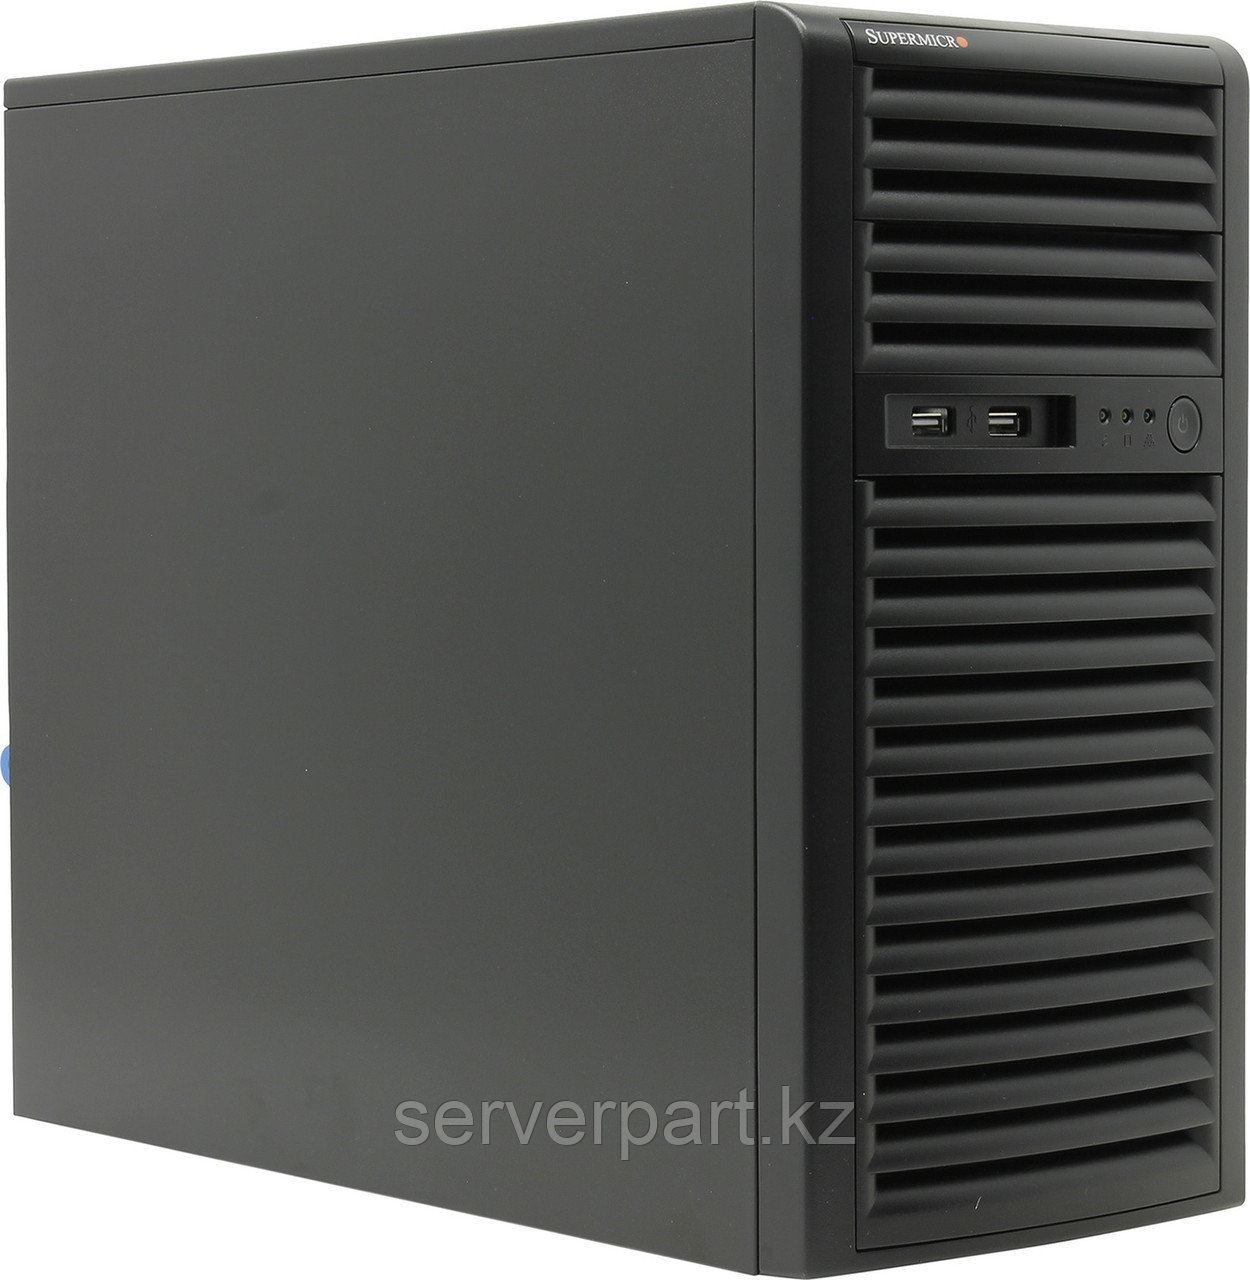 Сервер Supermicro 5039D Tower/4-core intel xeon E3-1220v6 3GHz/16GB UDIMM nECC/1x240GB SSD MU Hyb, фото 1